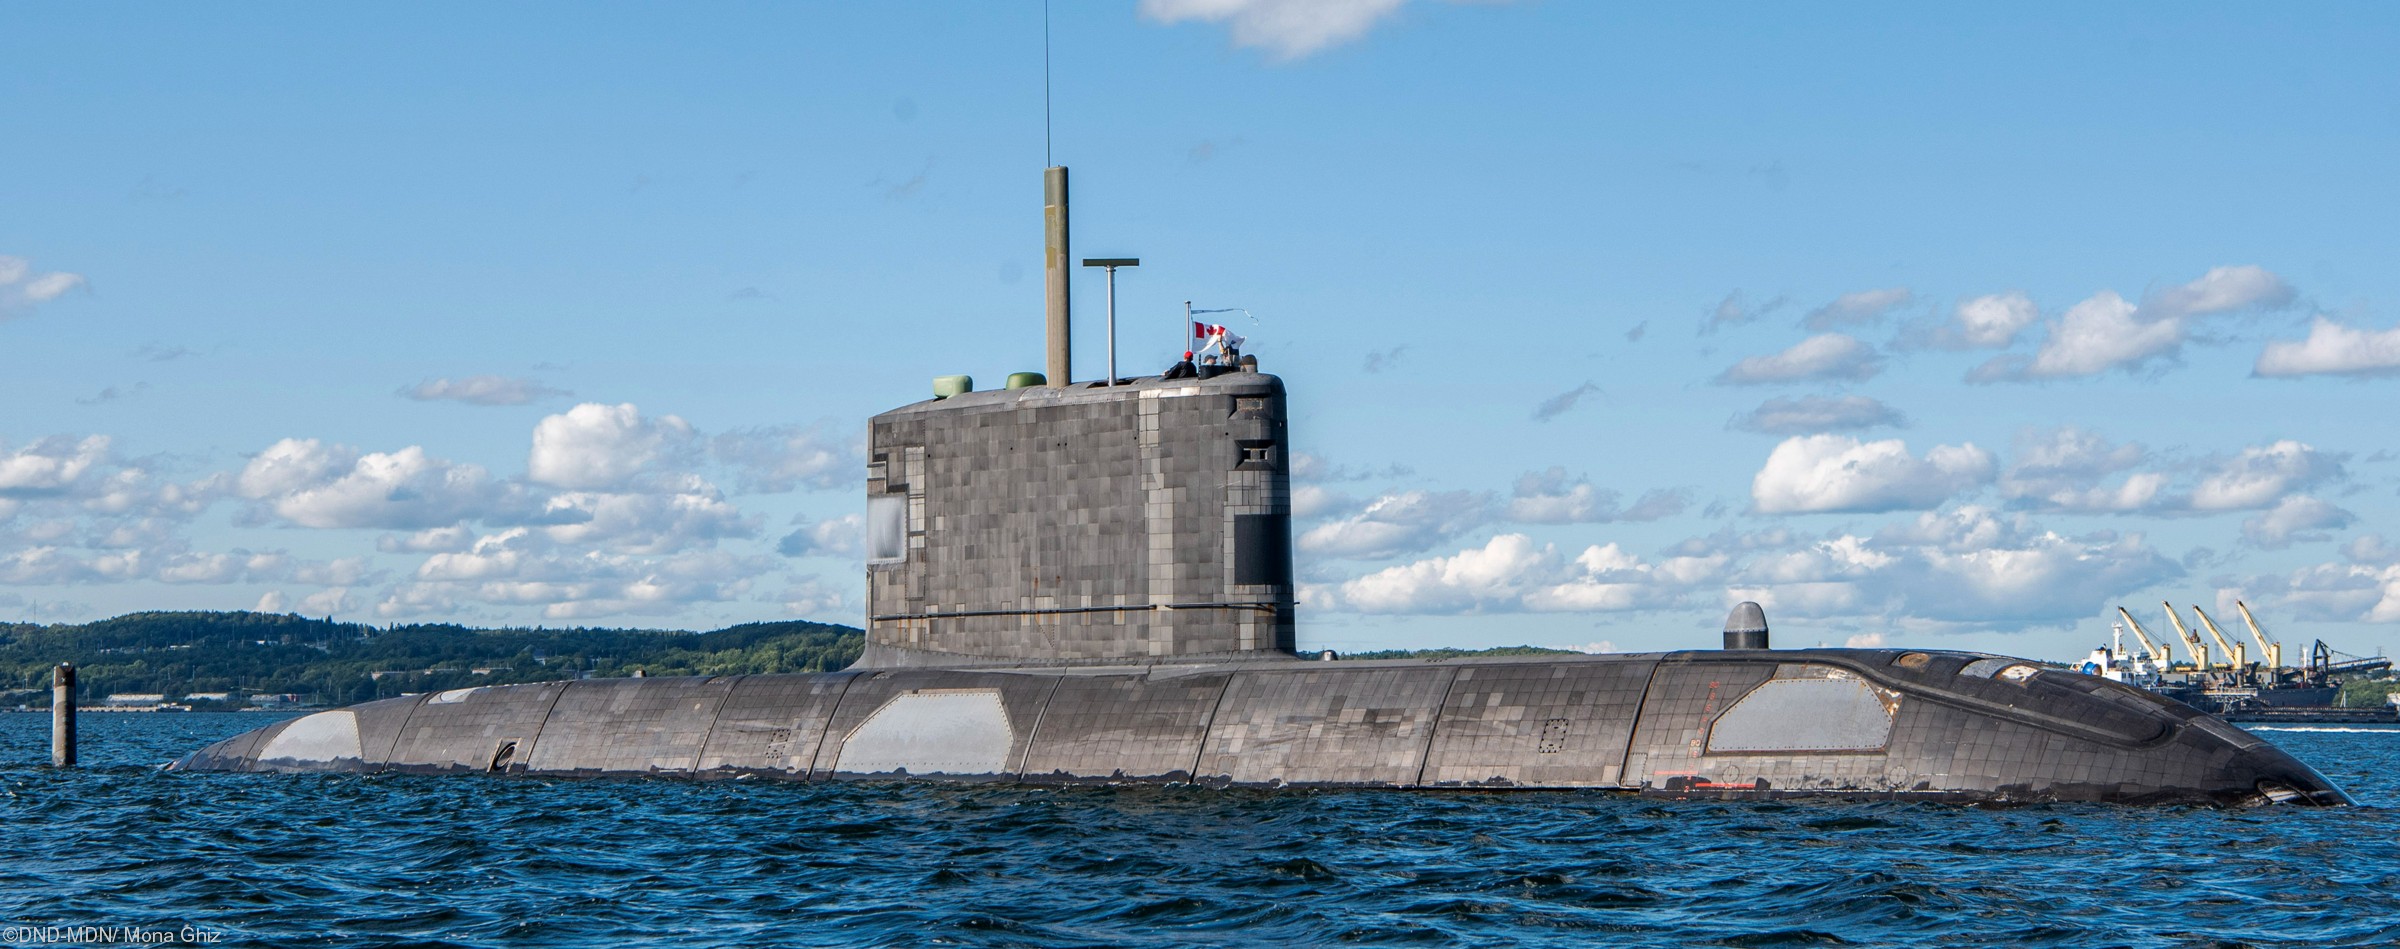 ssk-877 hmcs windsor victoria upholder class attack submarine hunter killer ncsm royal canadian navy 03